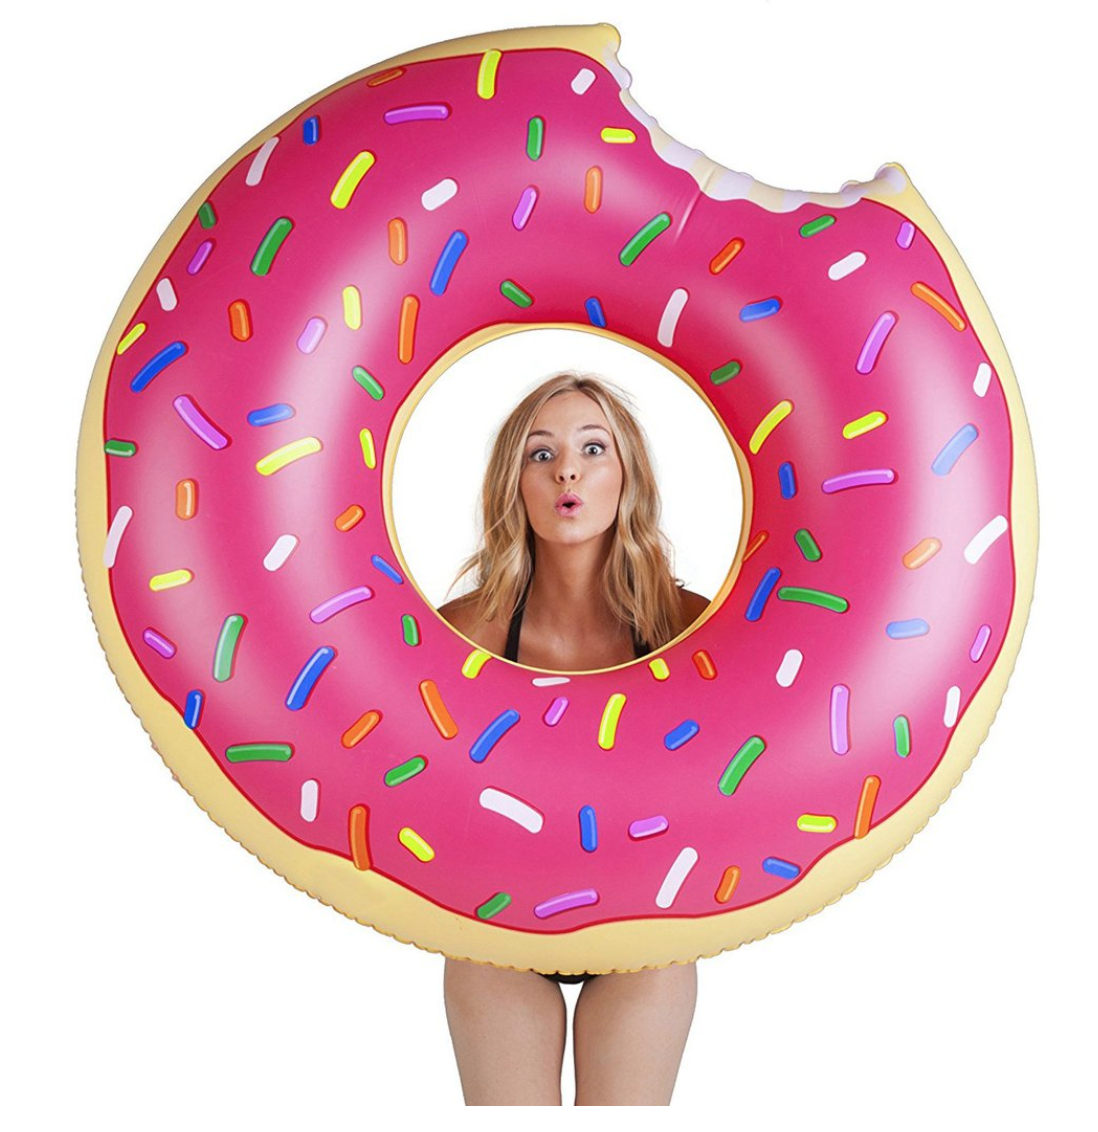 Gigantic Donut Pool Float